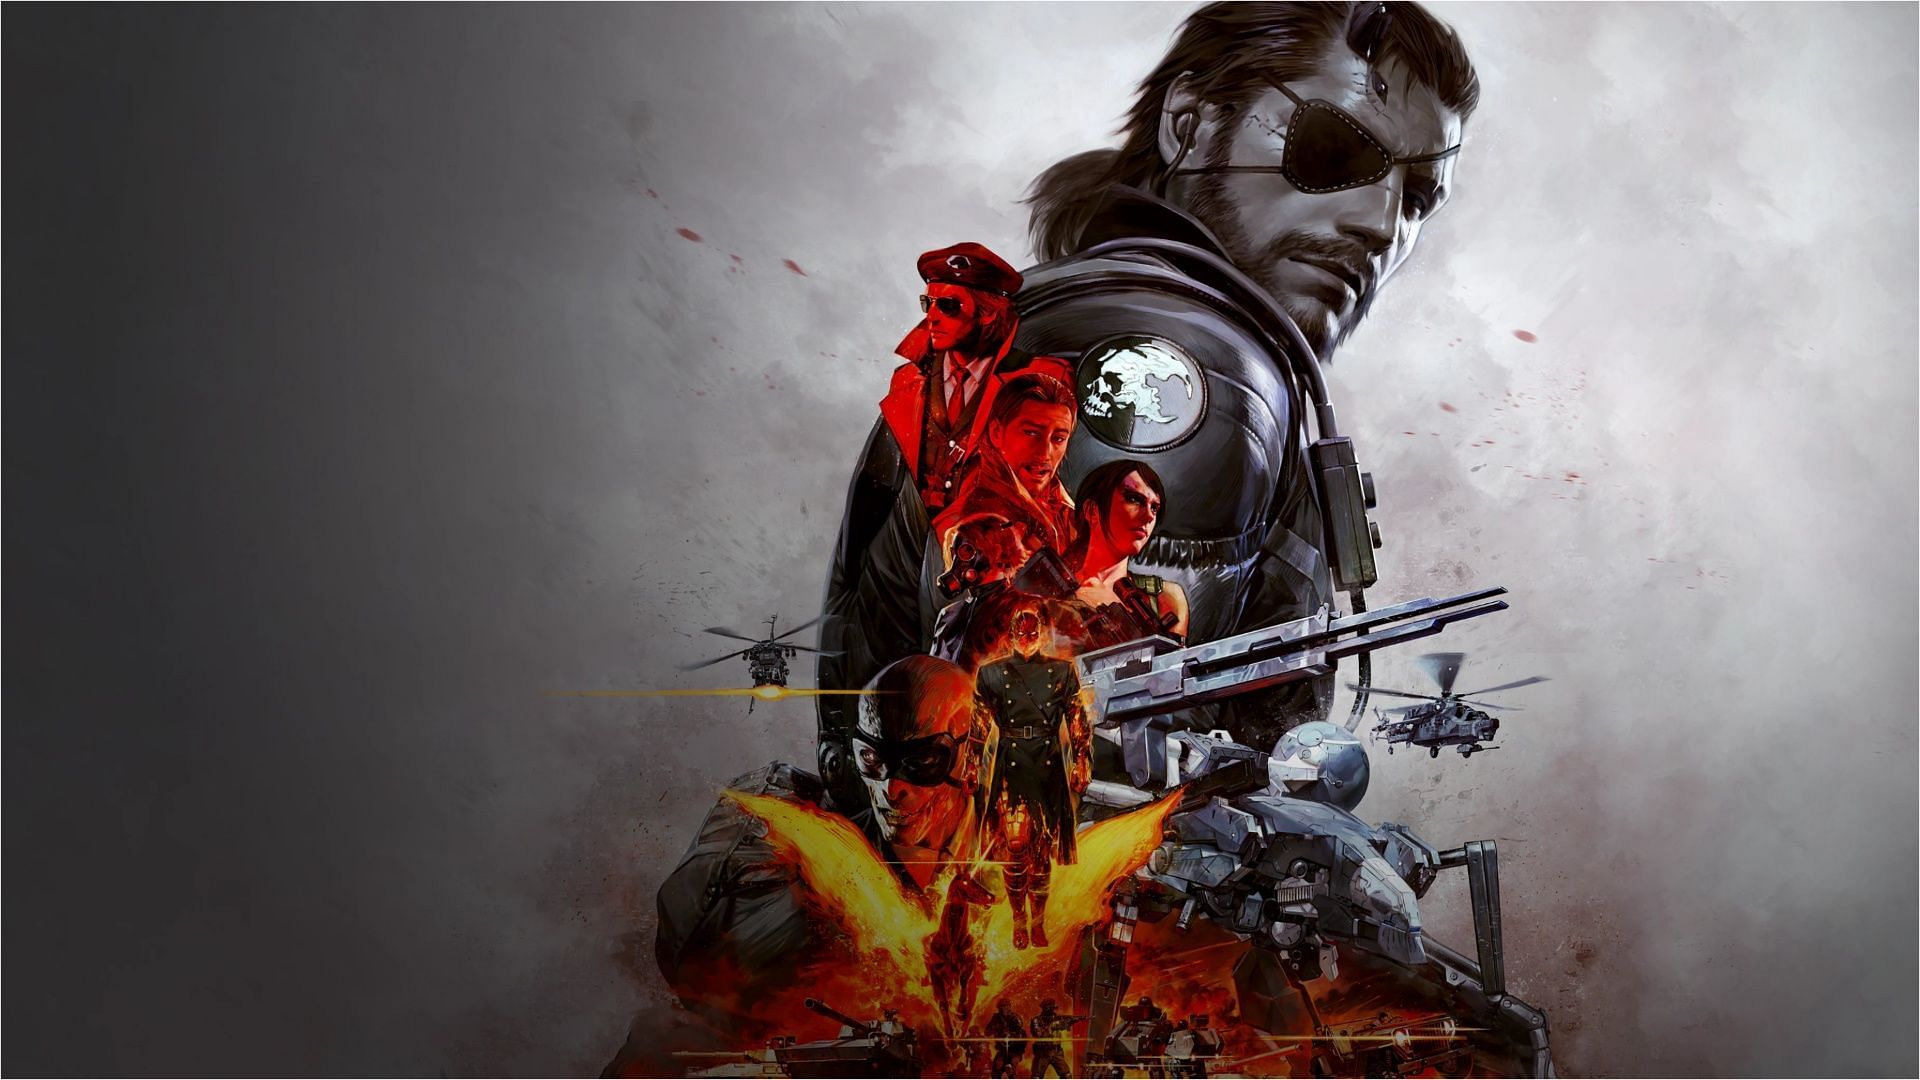 Metal Gear Solid 5: The Phantom Pain got its PC port in 2015 (Image via Konami)